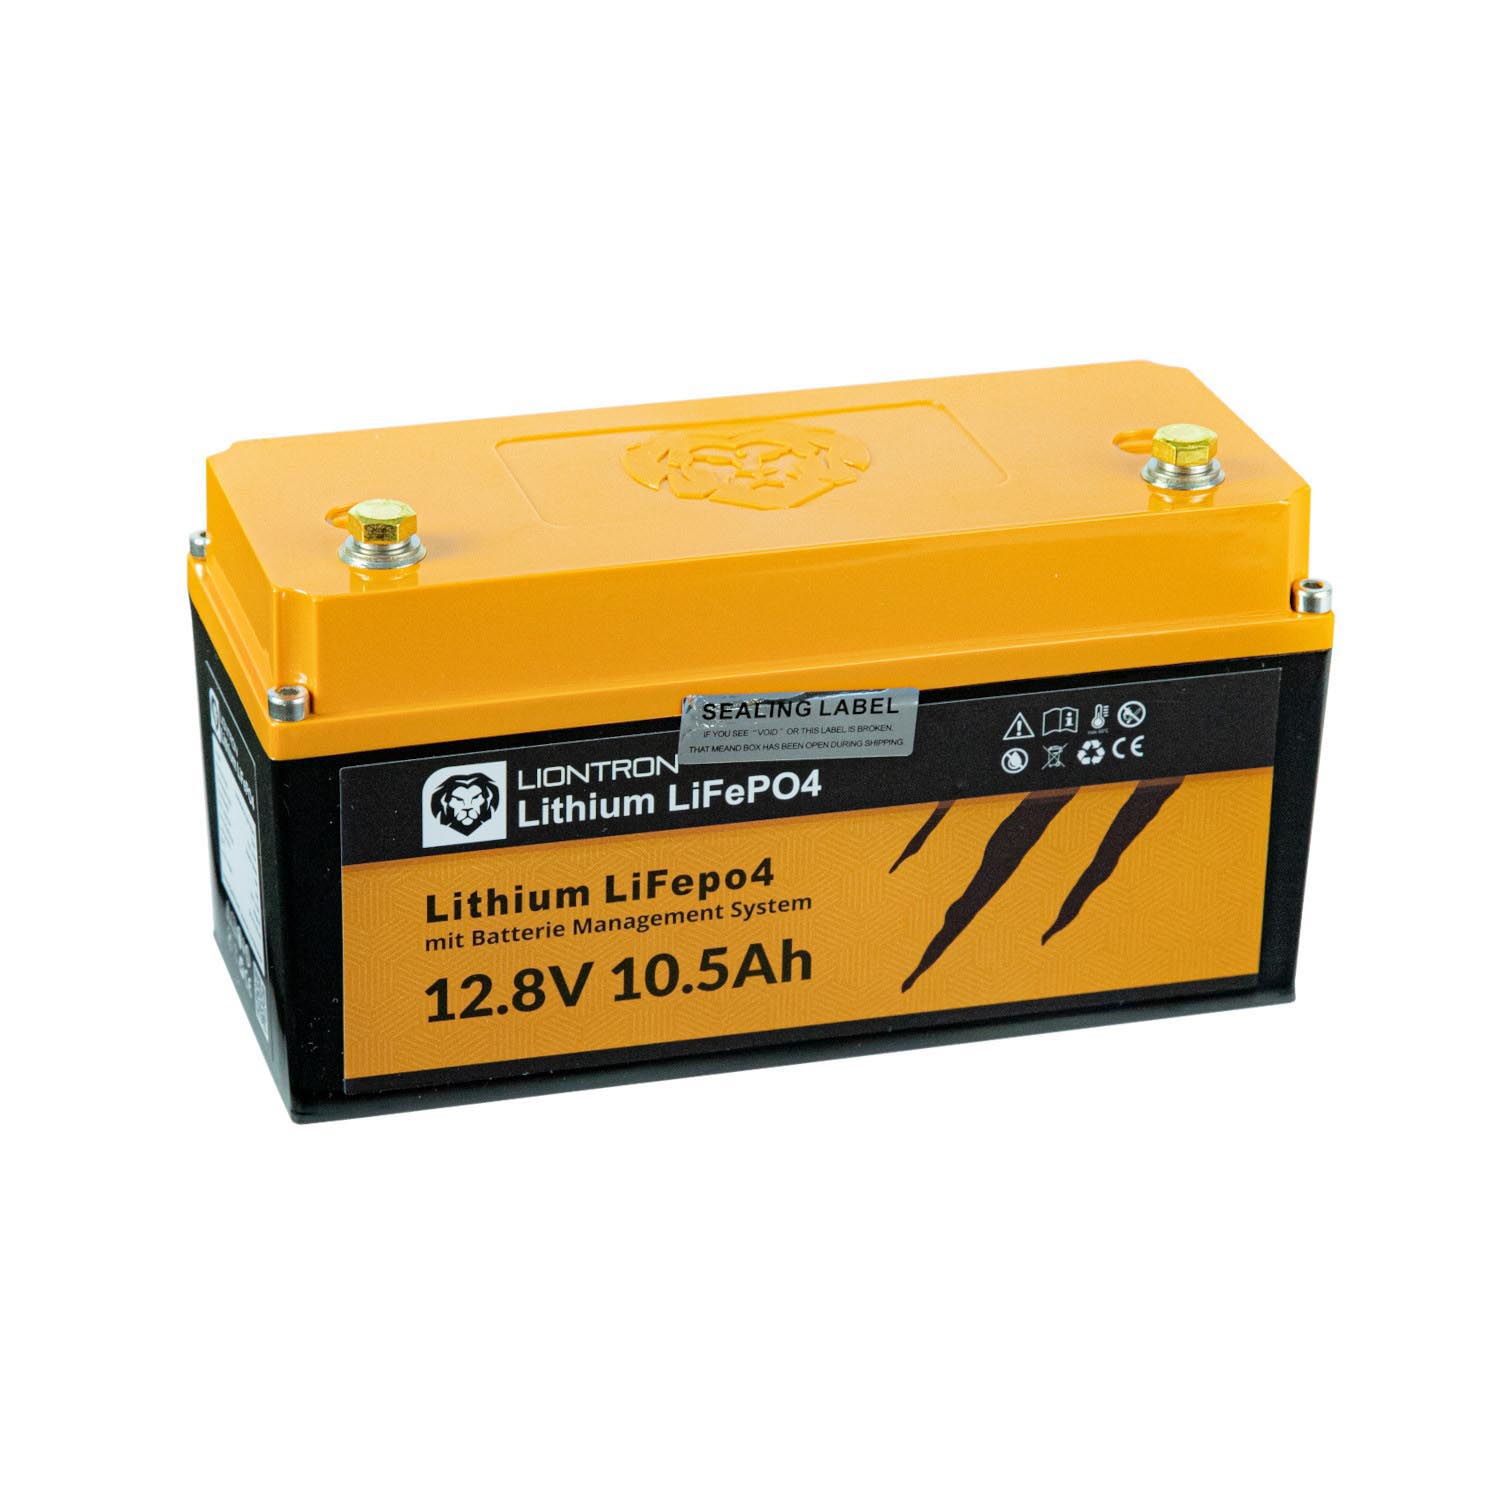 Liontron 10,5Ah 12V LiFePO4 Lithium Batterie Wohnmobil Speicherbatterie